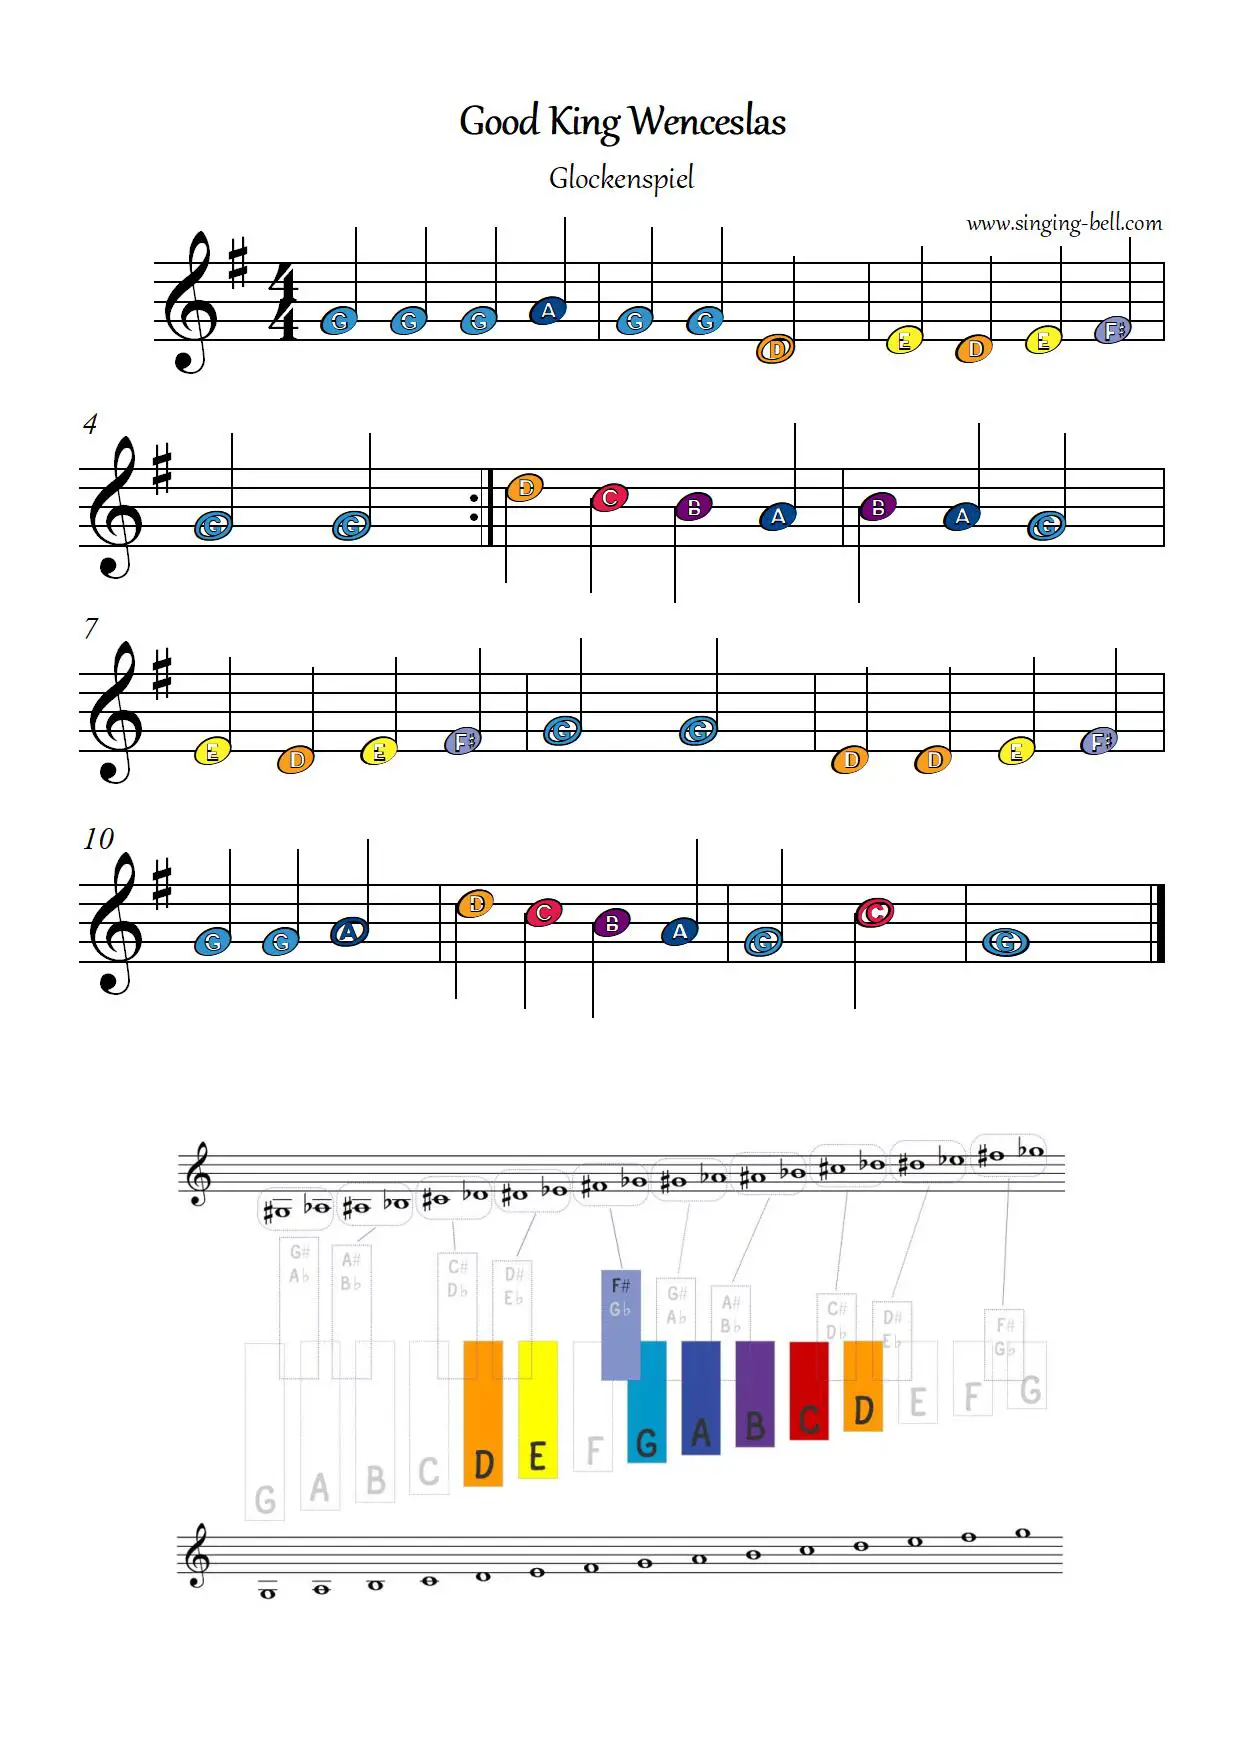 Good King Wenceslas free xylophone glockenspiel sheet music color notes chart pdf